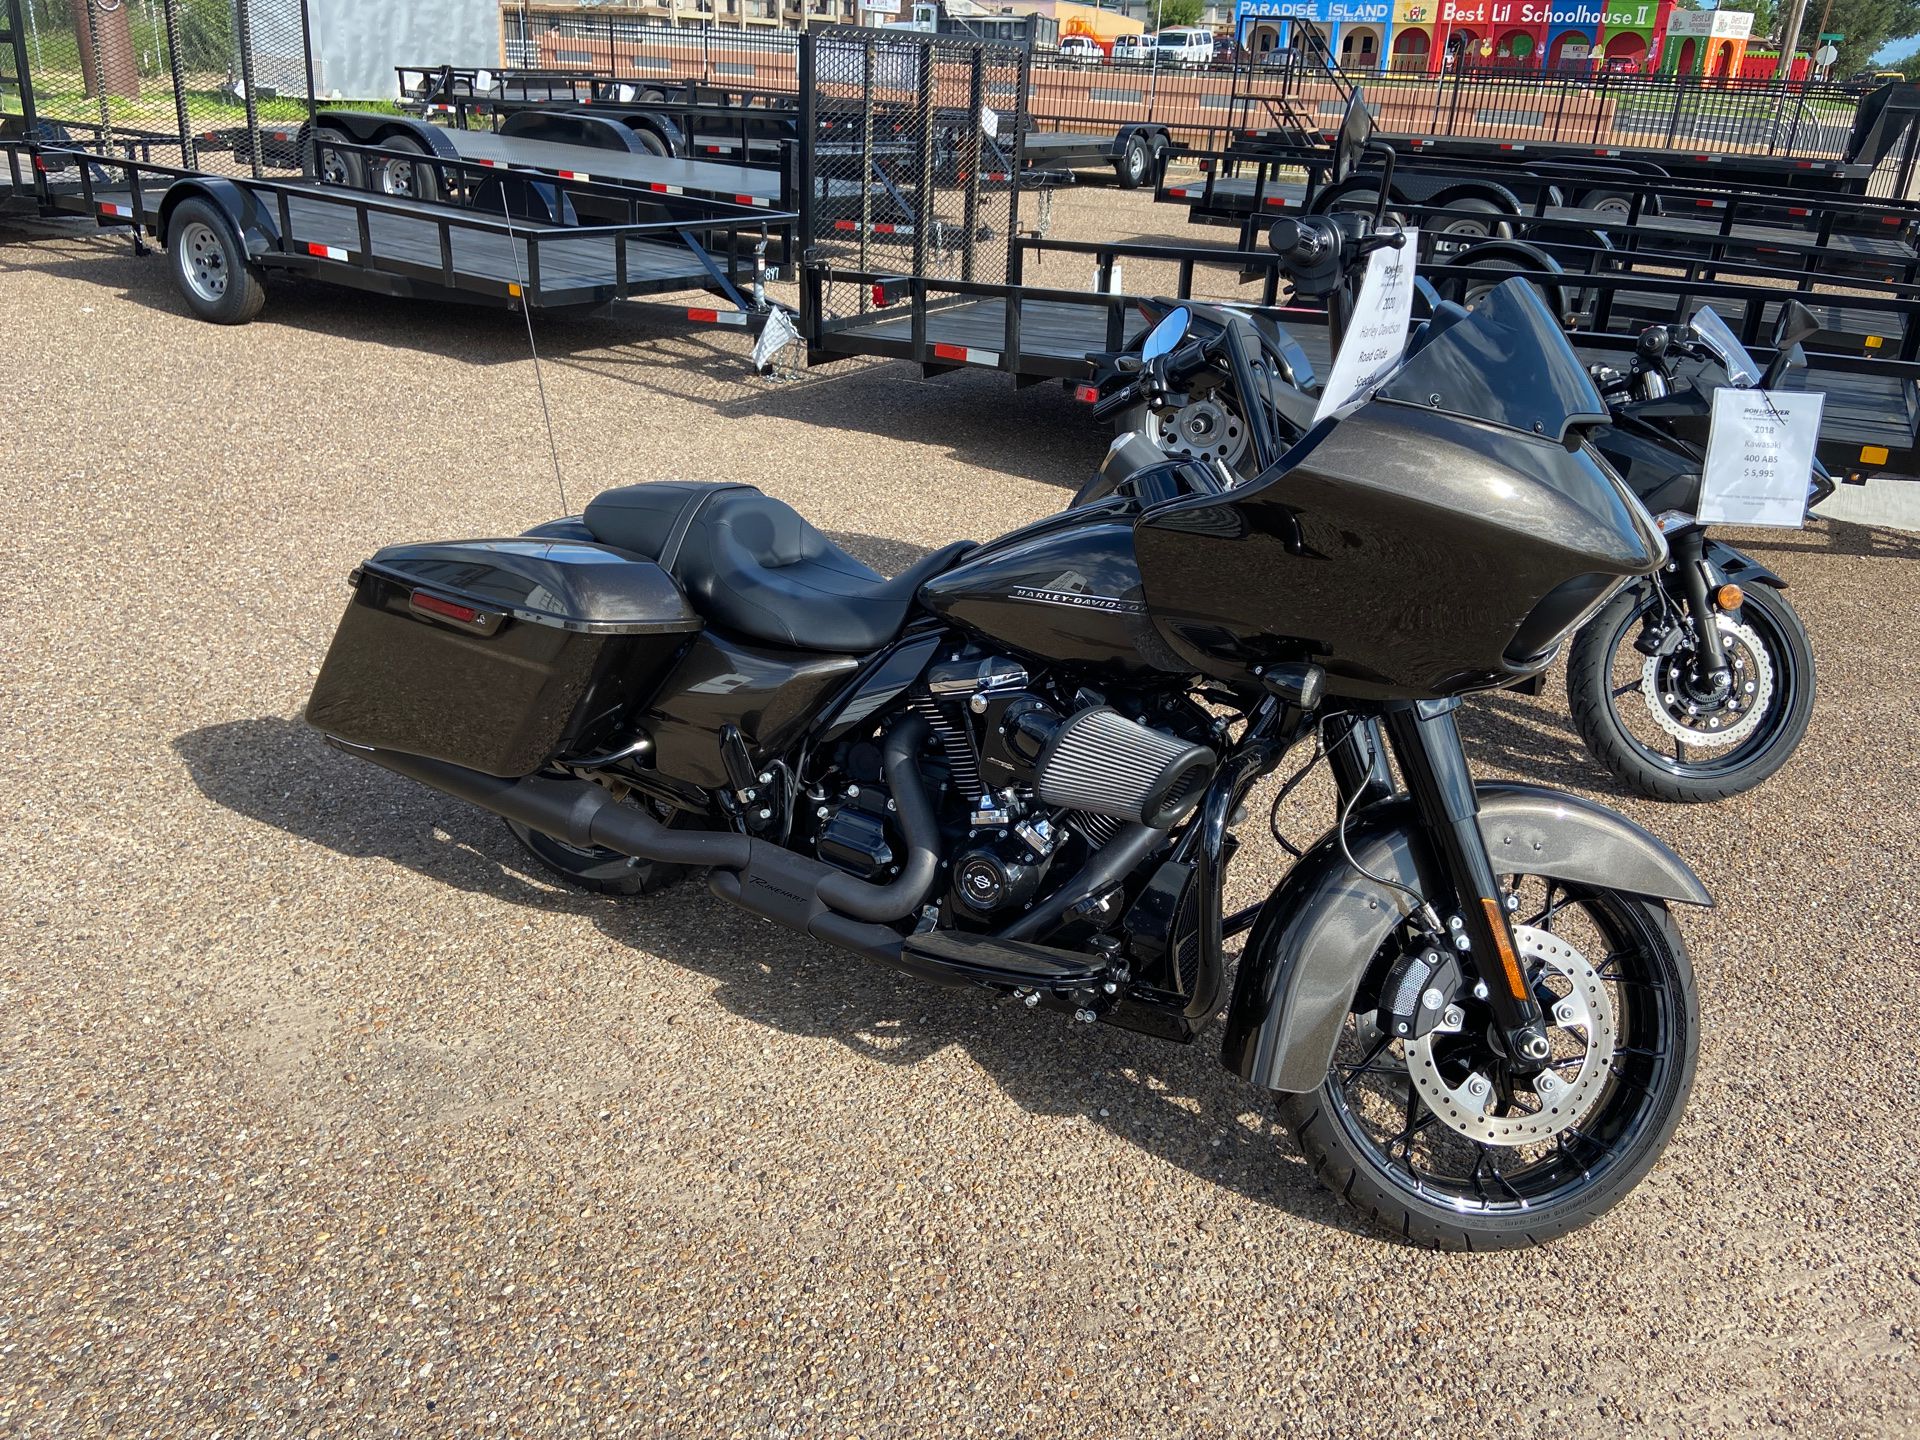 2020 Harley Davidson Roadglide Special